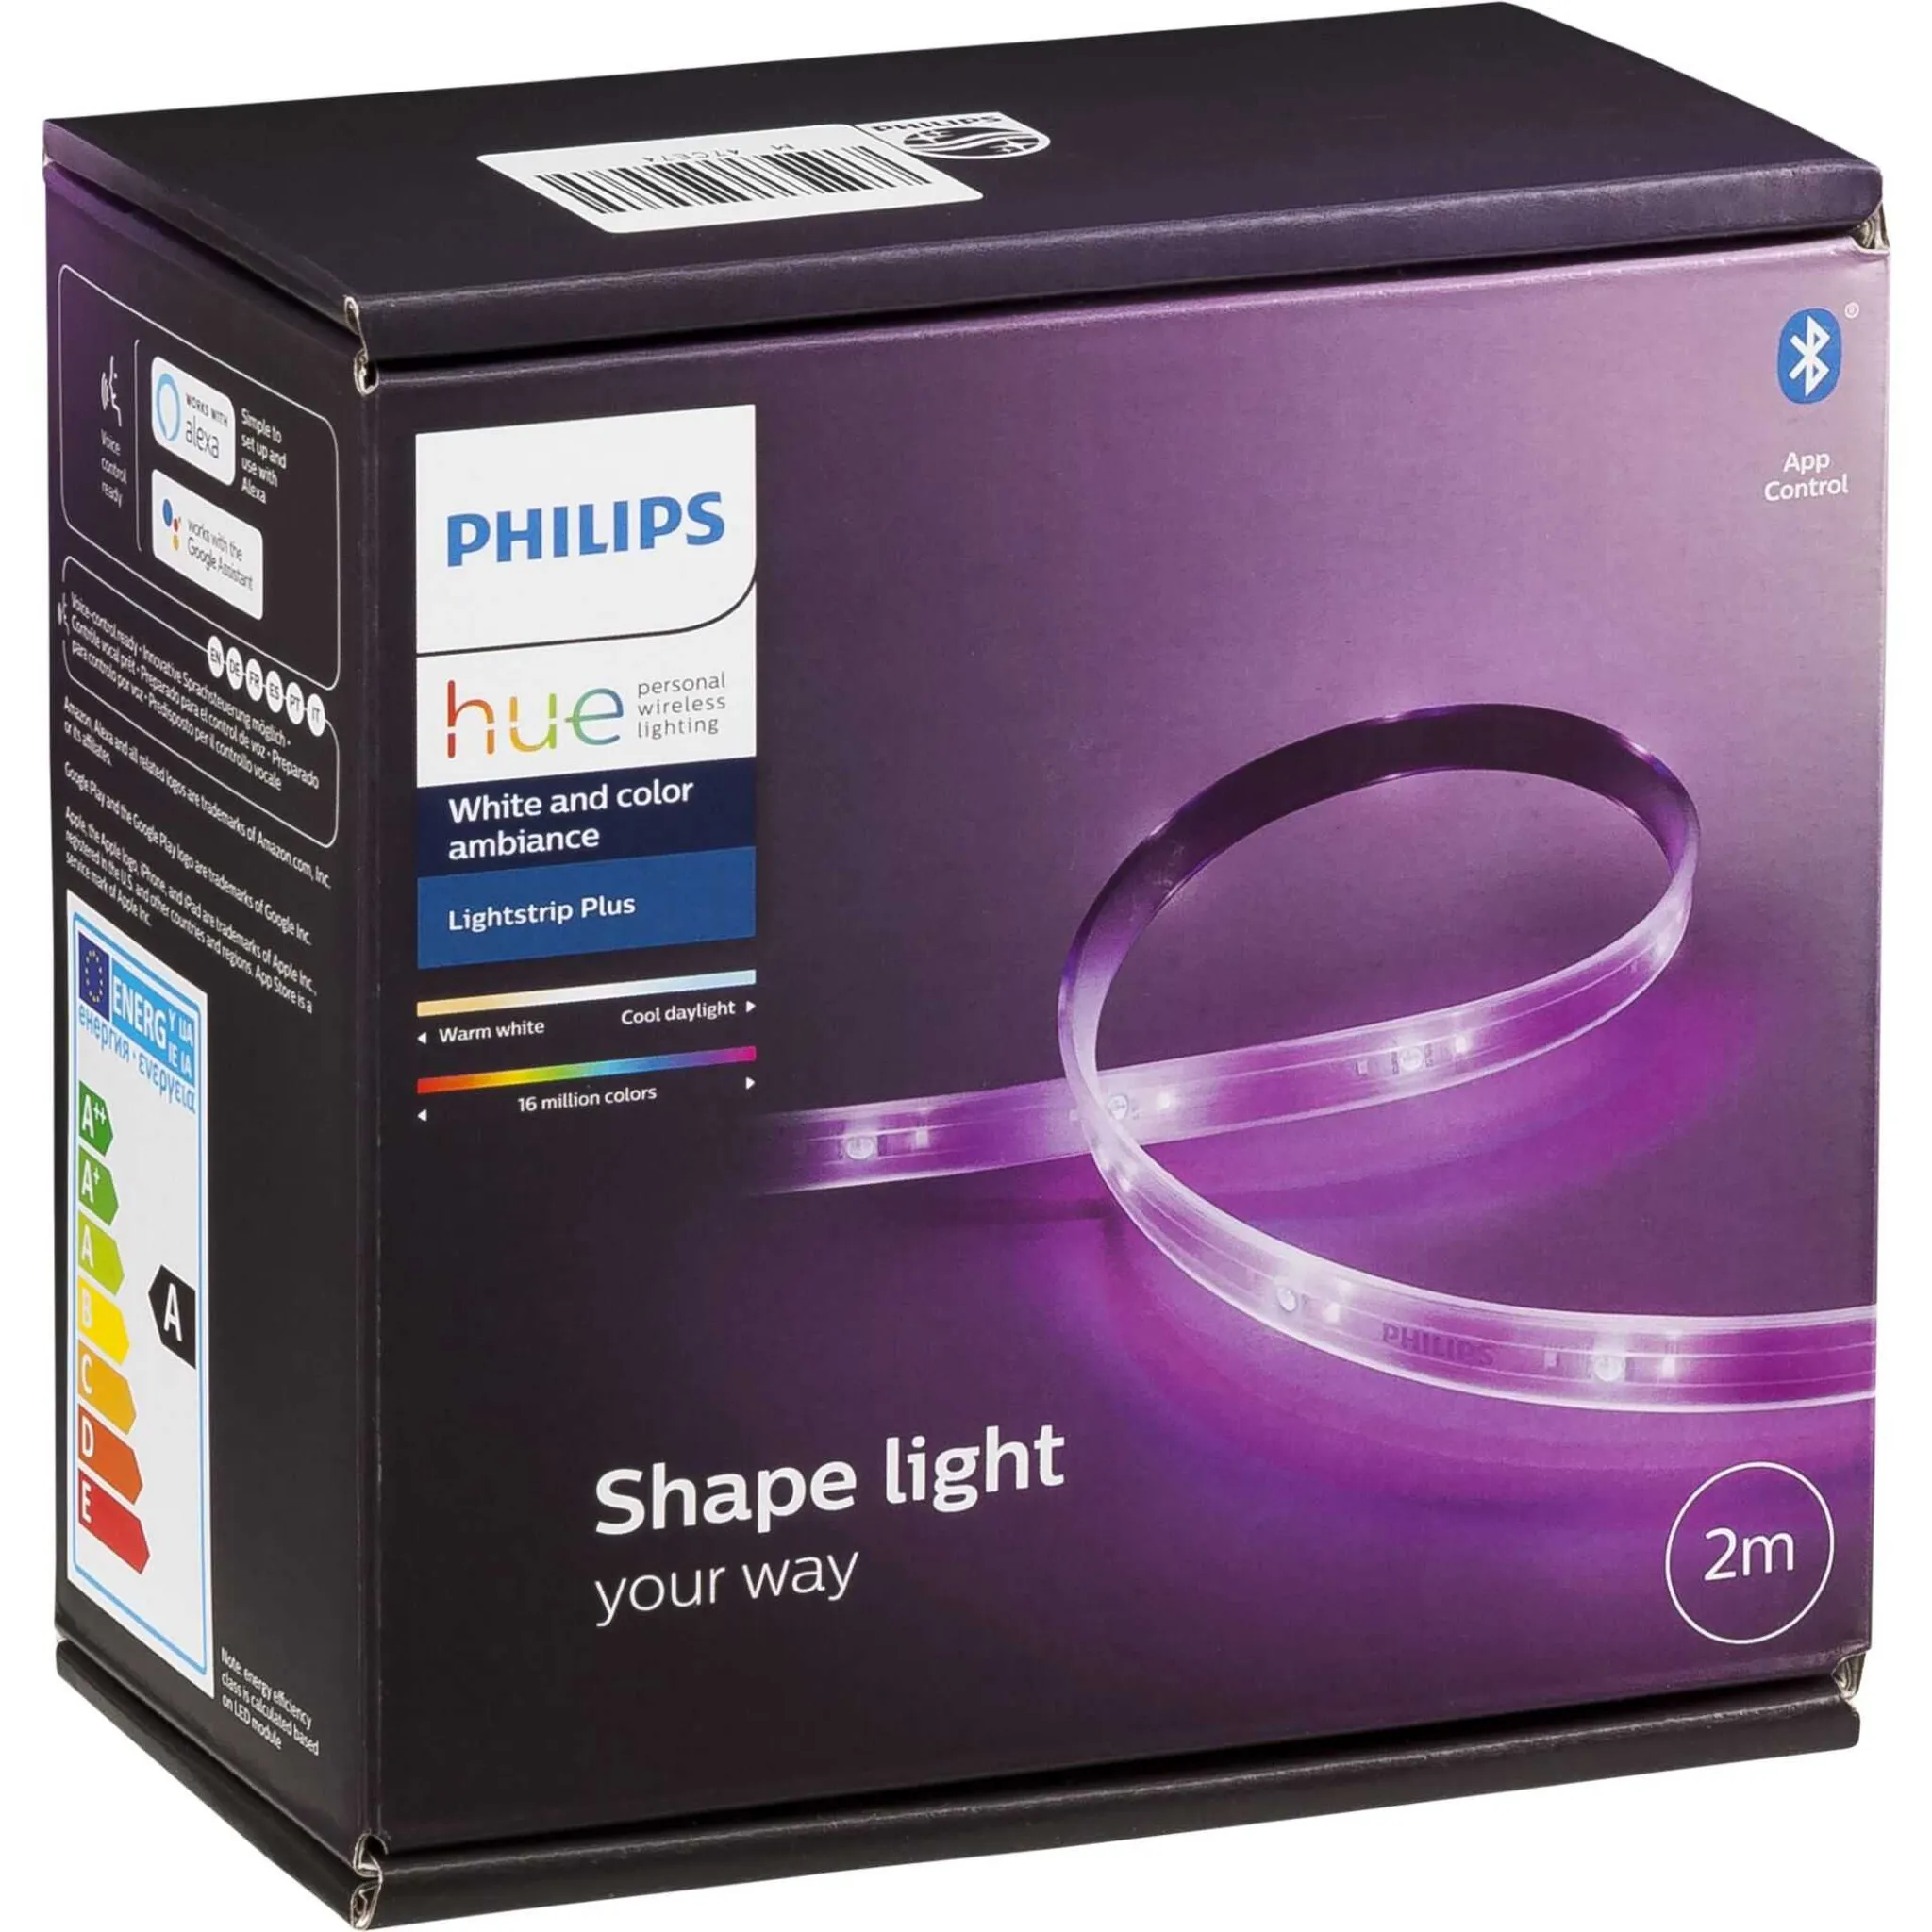 Philips Hue LightStrip Plus 2m 1600lm White